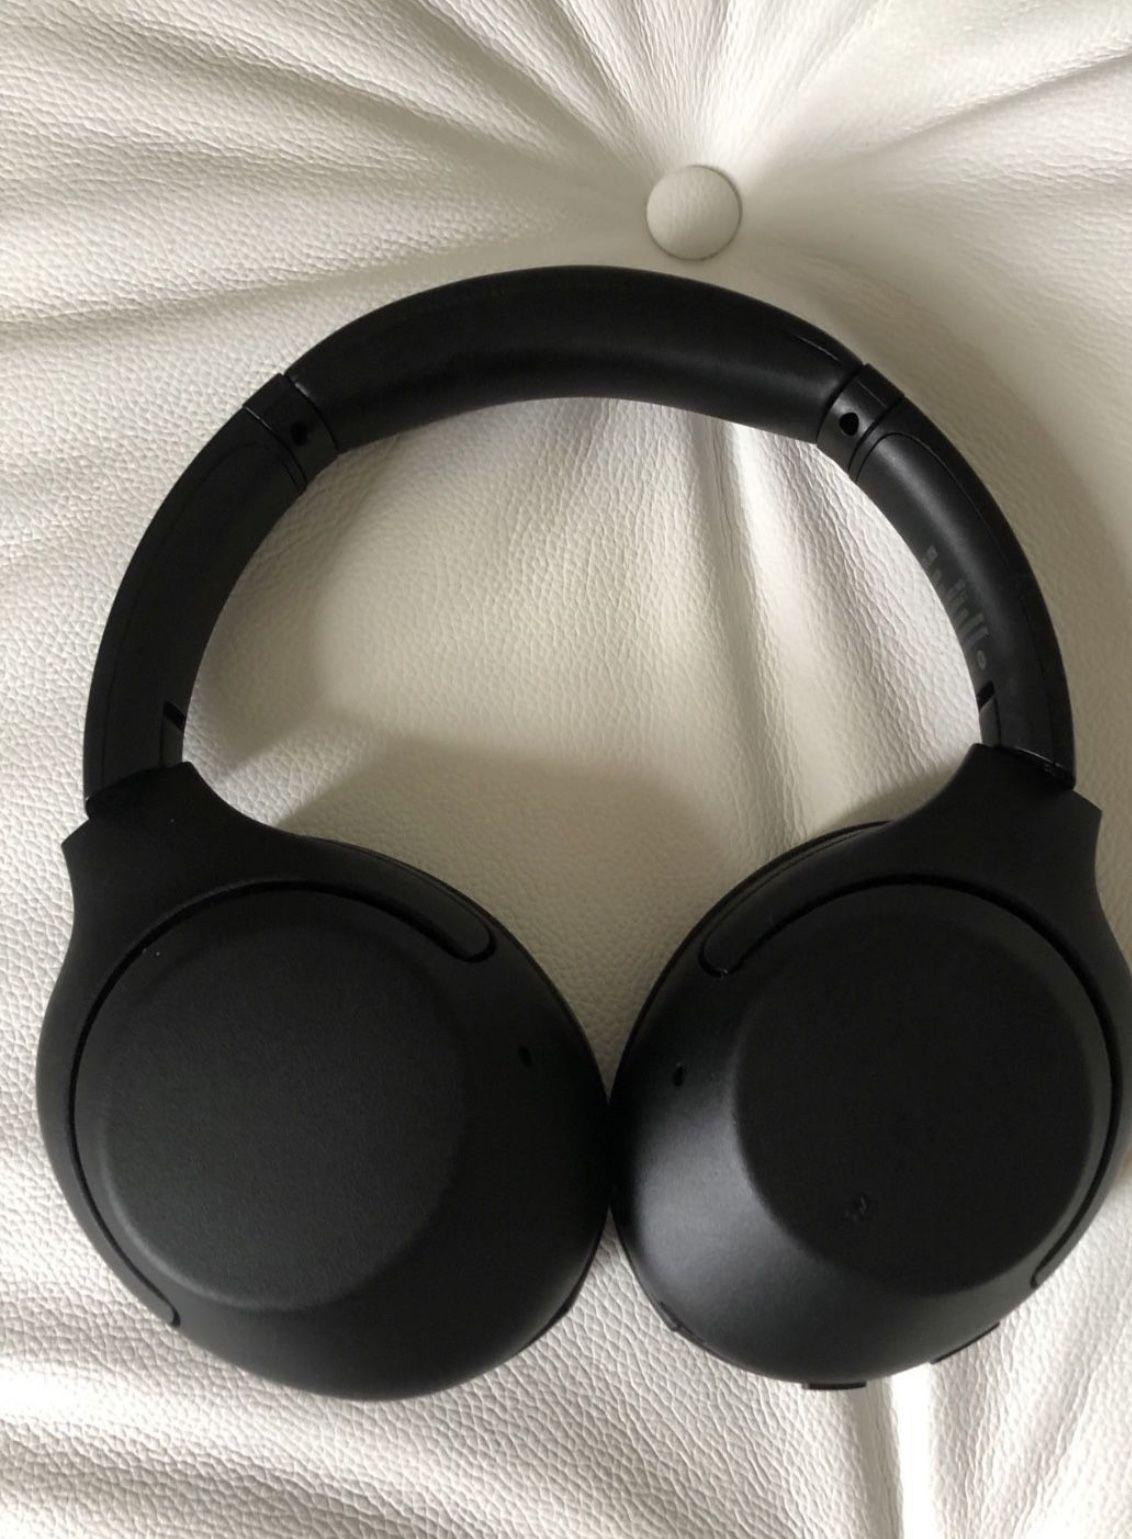 Sony WHXB900N Wireless Headphones - Black 